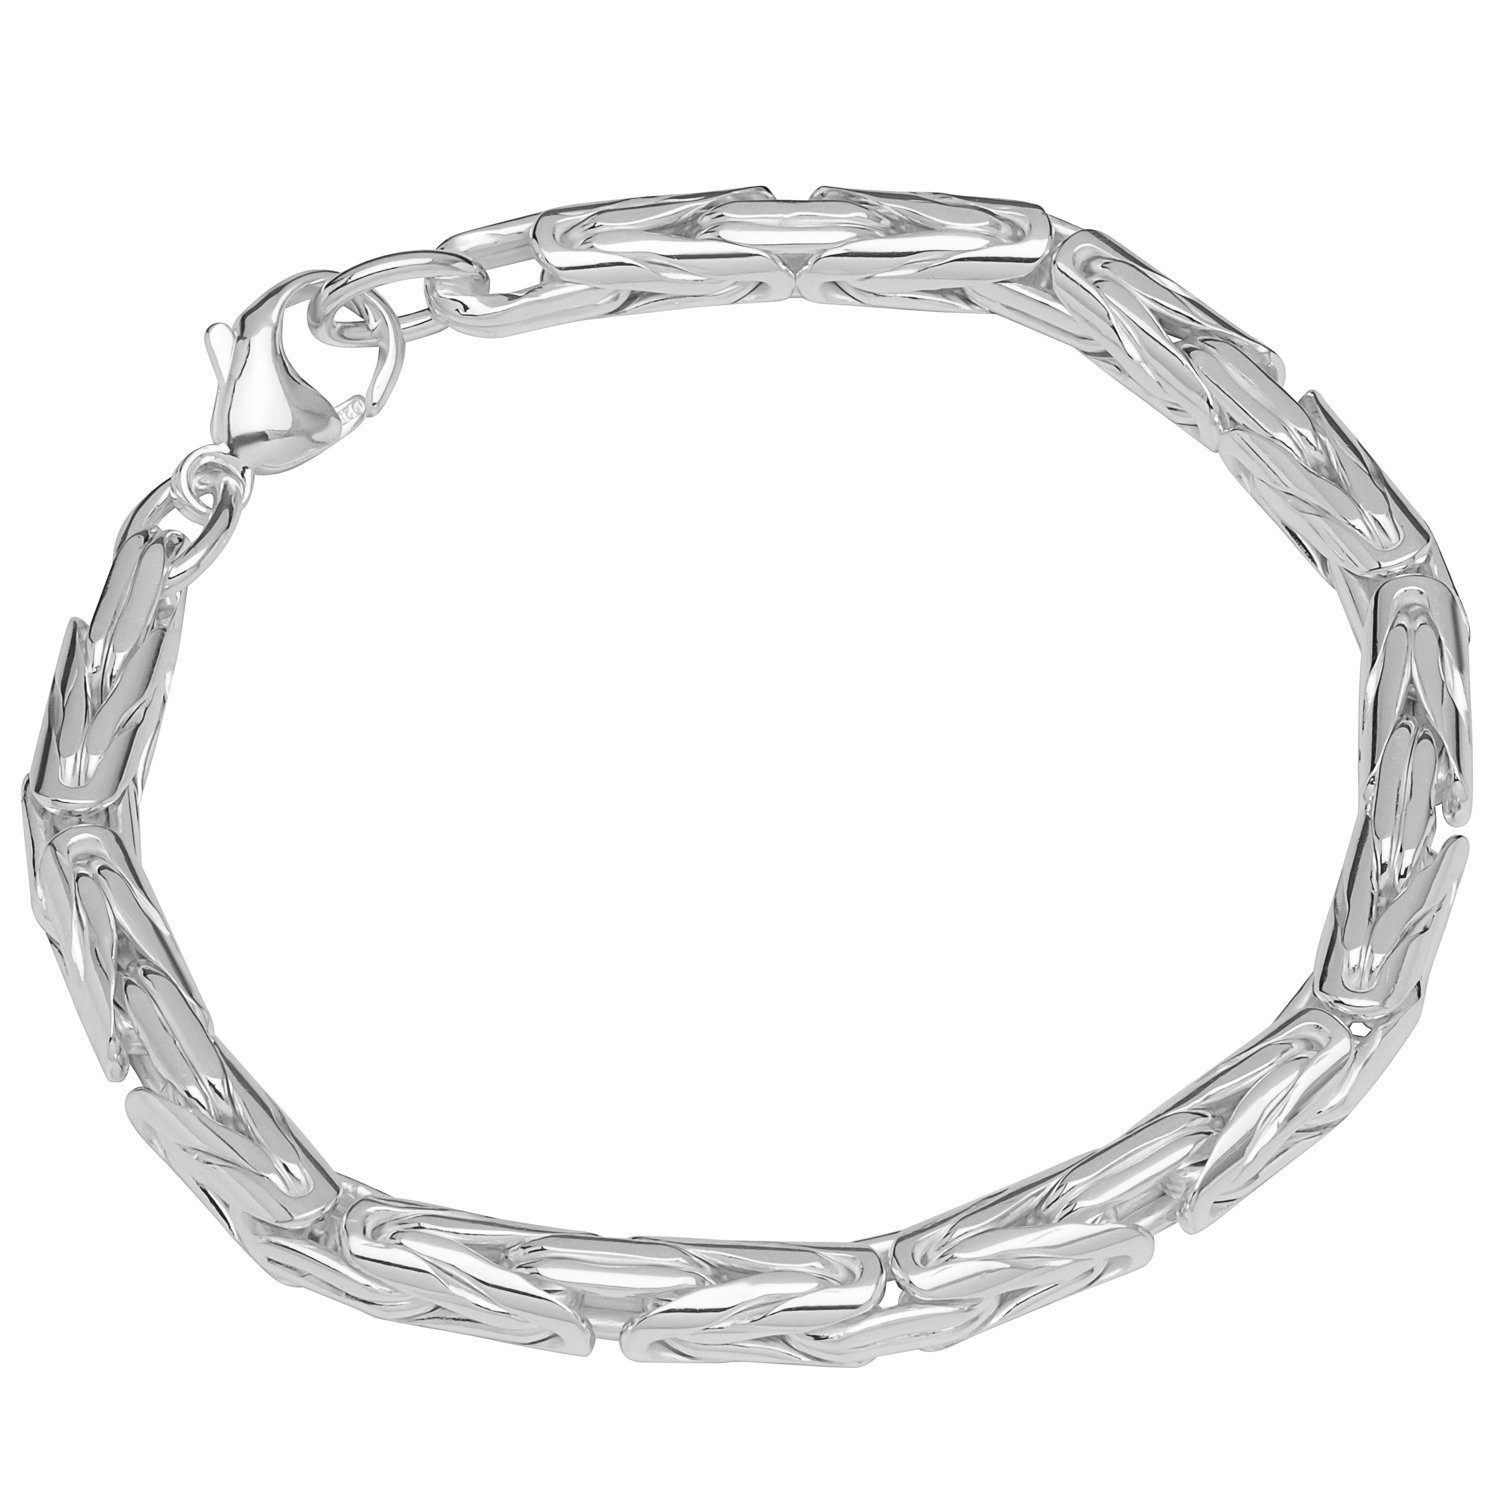 NKlaus Silberarmband Armband 925 Sterling Silber 21cm Königskette rund (1 Stück), Made in Germany